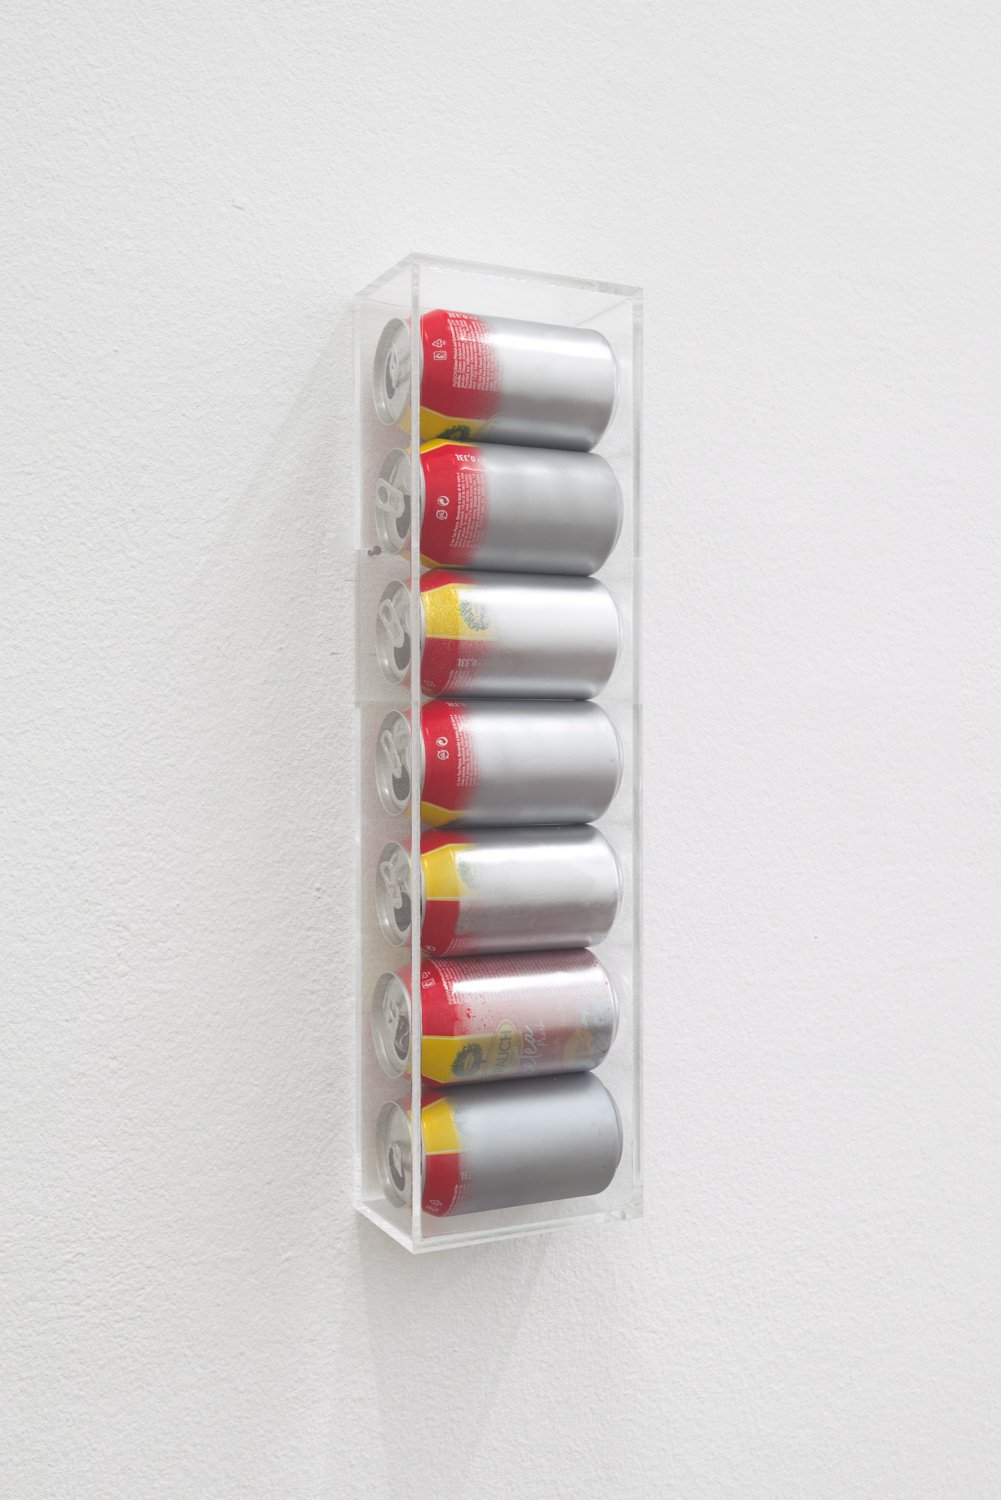 Benjamin HirteChromes will break your heart, 2014Chrome spray paint, cans, acrylic glass48.5 x 13 x 8 cm